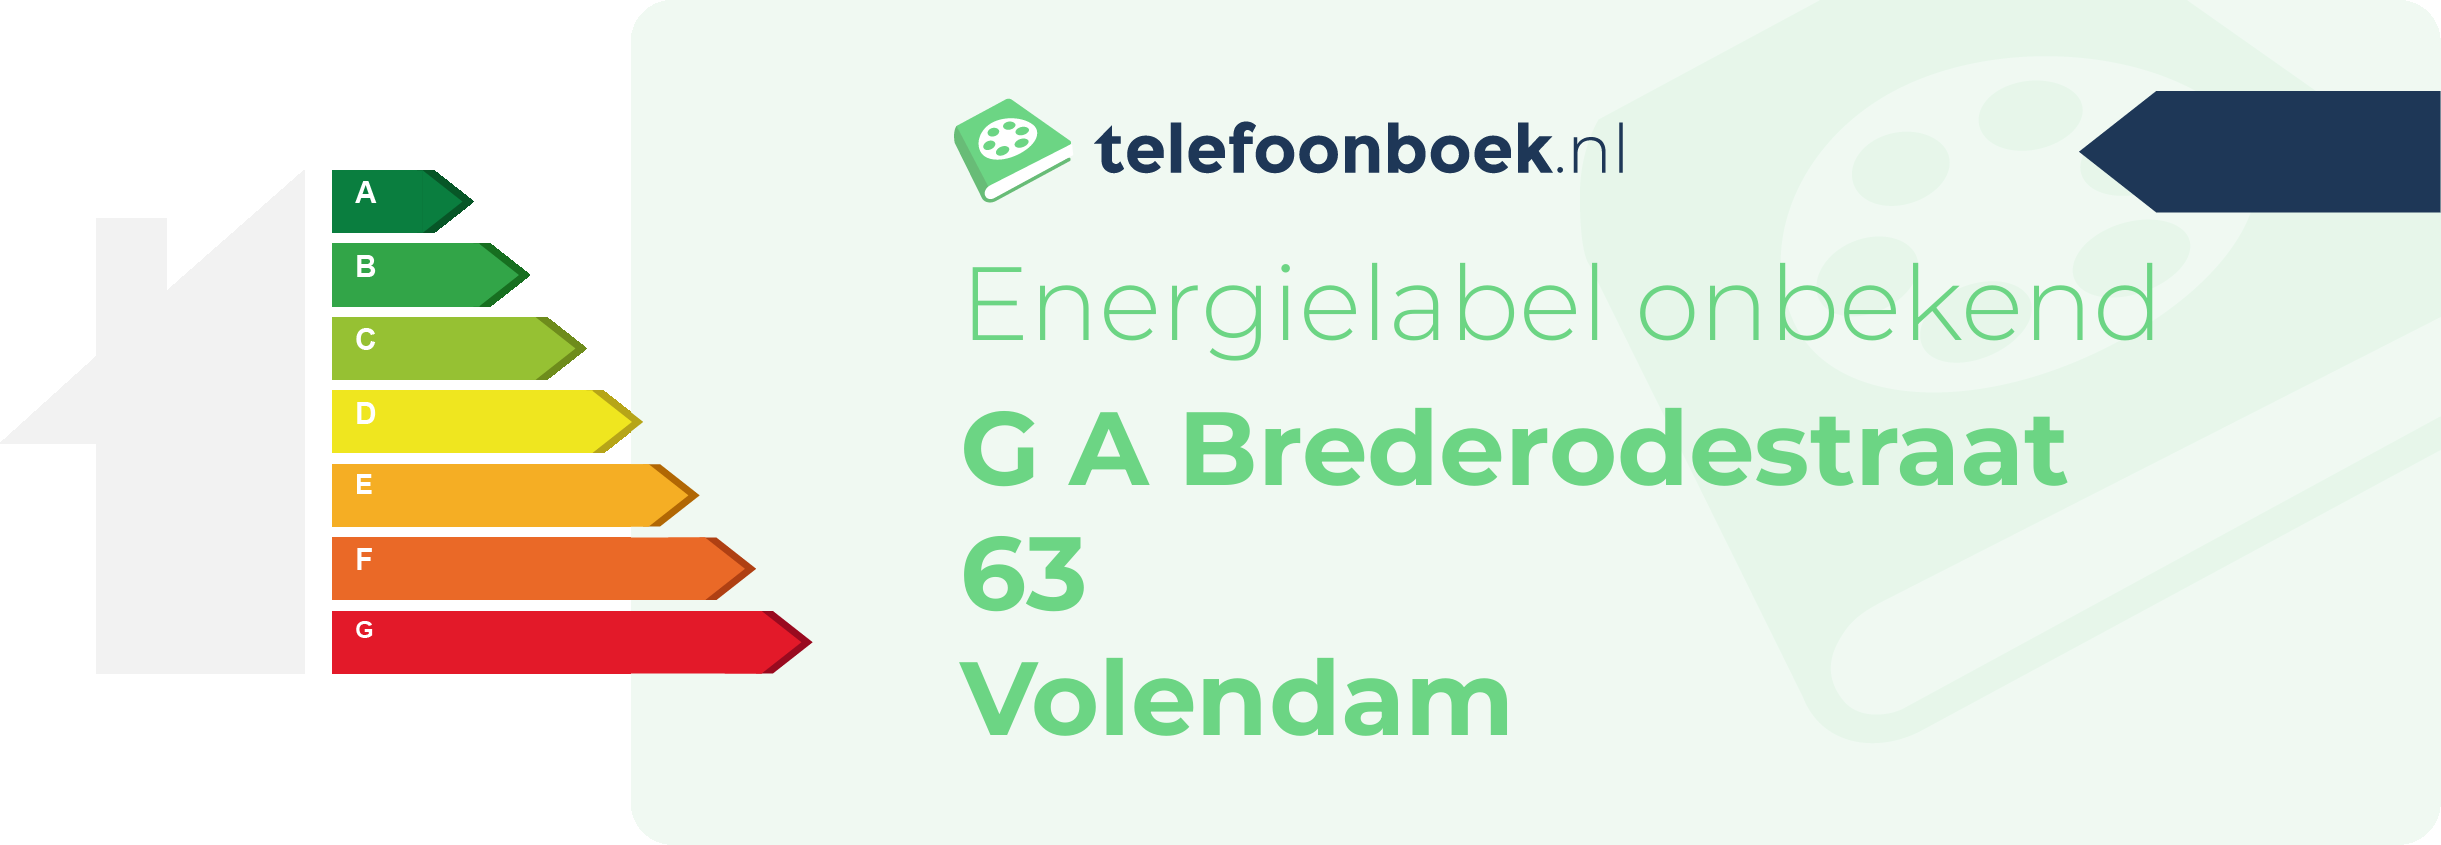 Energielabel G A Brederodestraat 63 Volendam